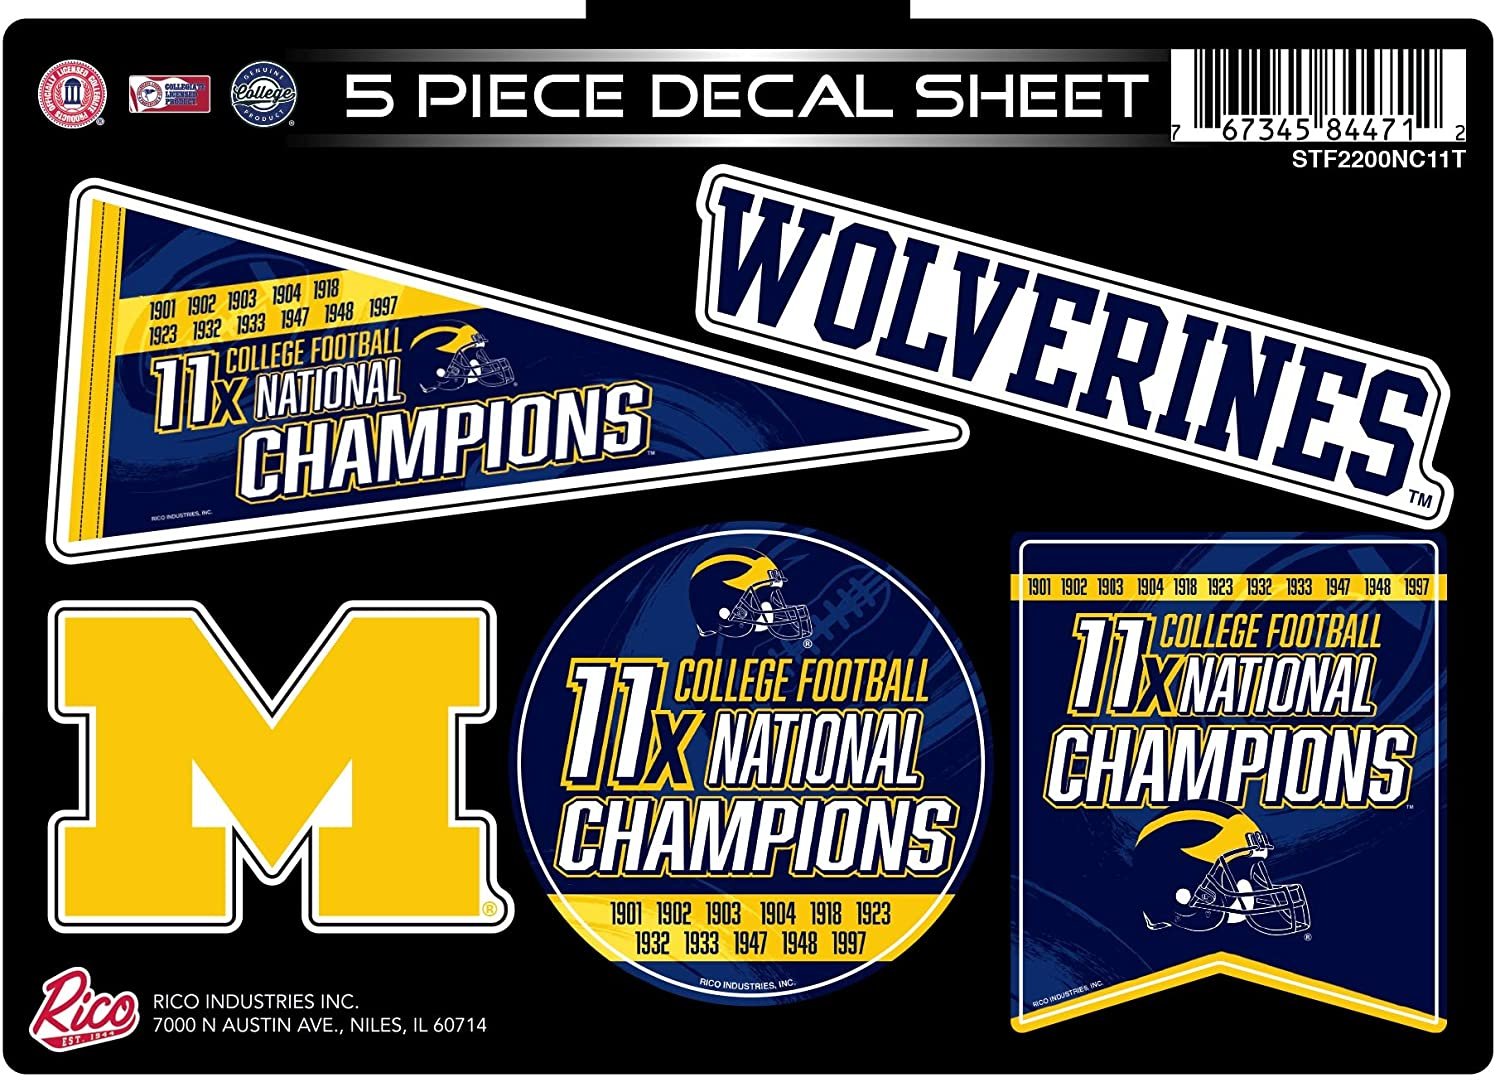 Michigan Wolverines 11X Time Champions Decal Sticker Multi Sheet 5 Piece Flat Vinyl Emblem University of